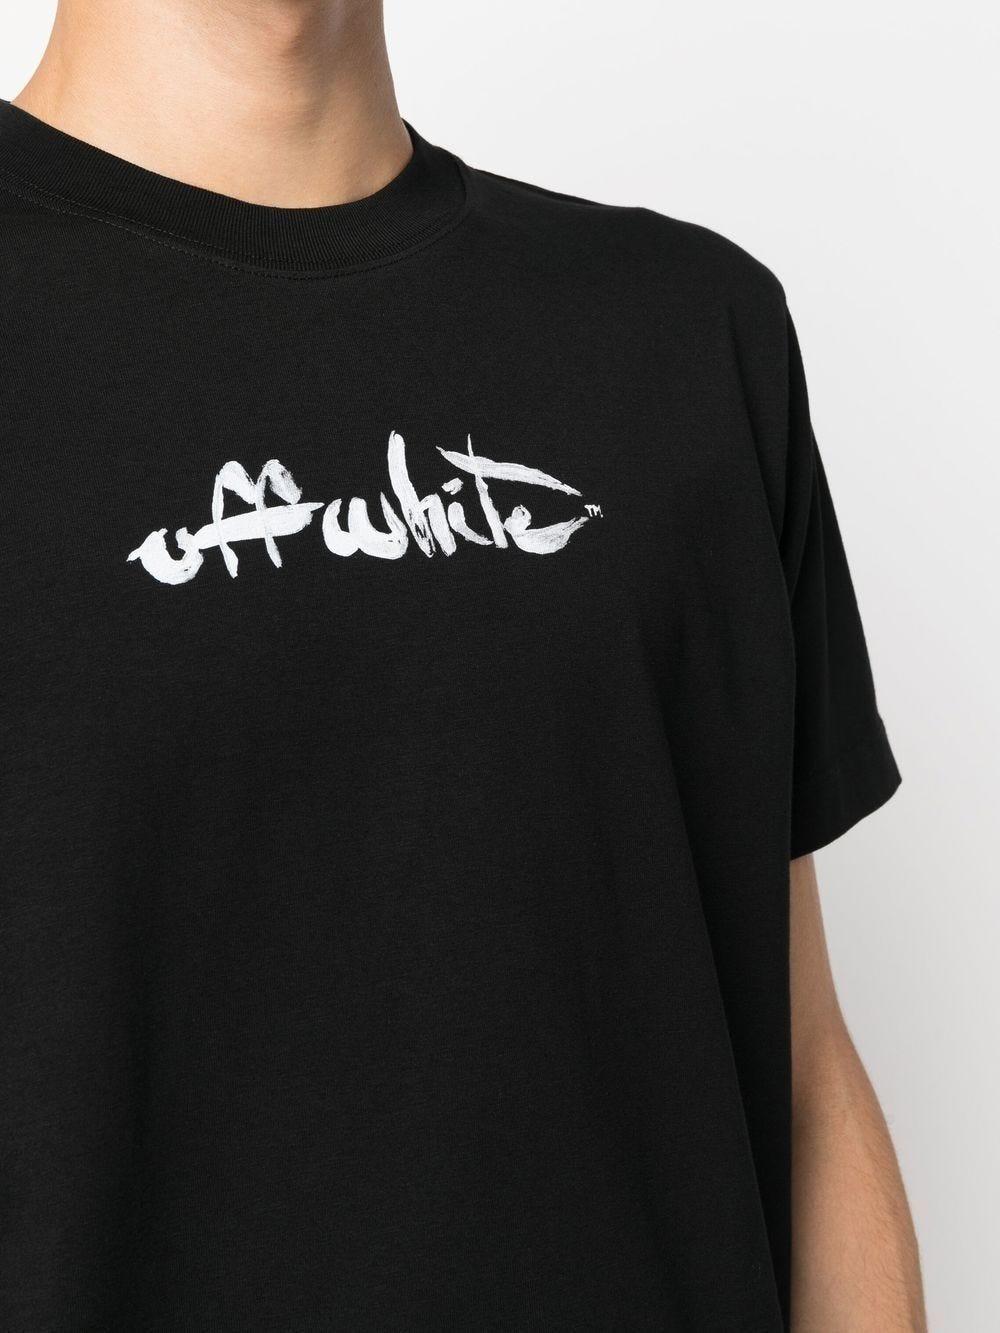 OFF WHITE C/O VIRGIL ABLOH 2013 Black Graphic T-Shirt (Size L) | Carolyn's